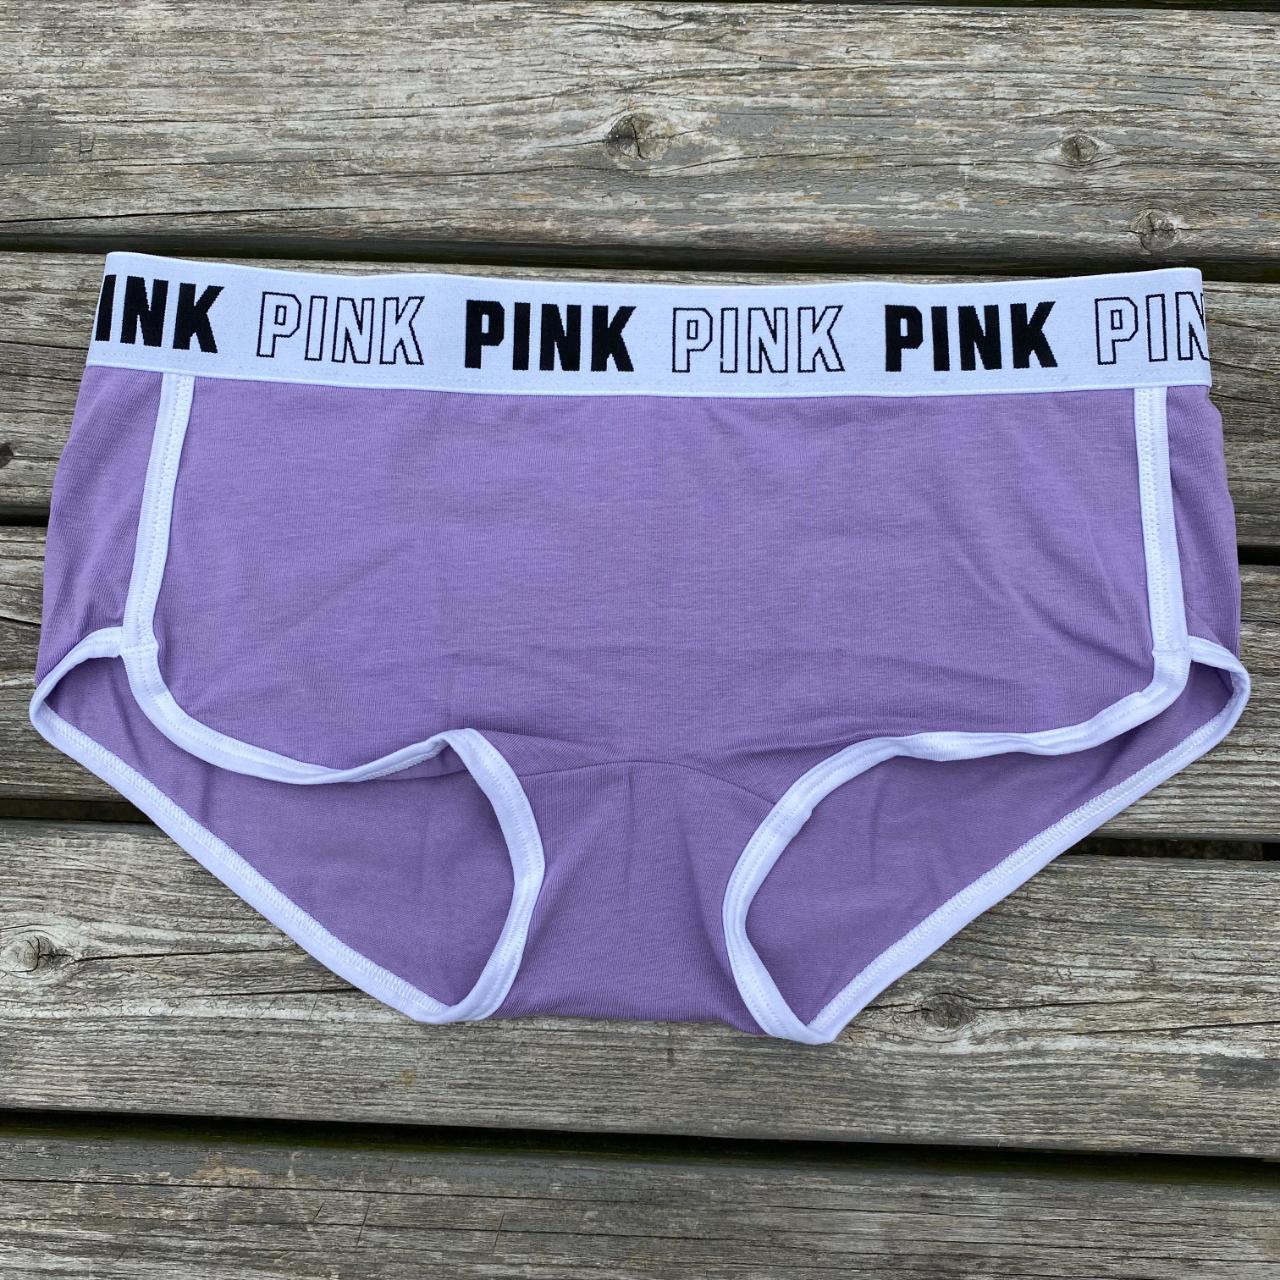 Victoria's Secret PINK boyshort/boxer panties., Size